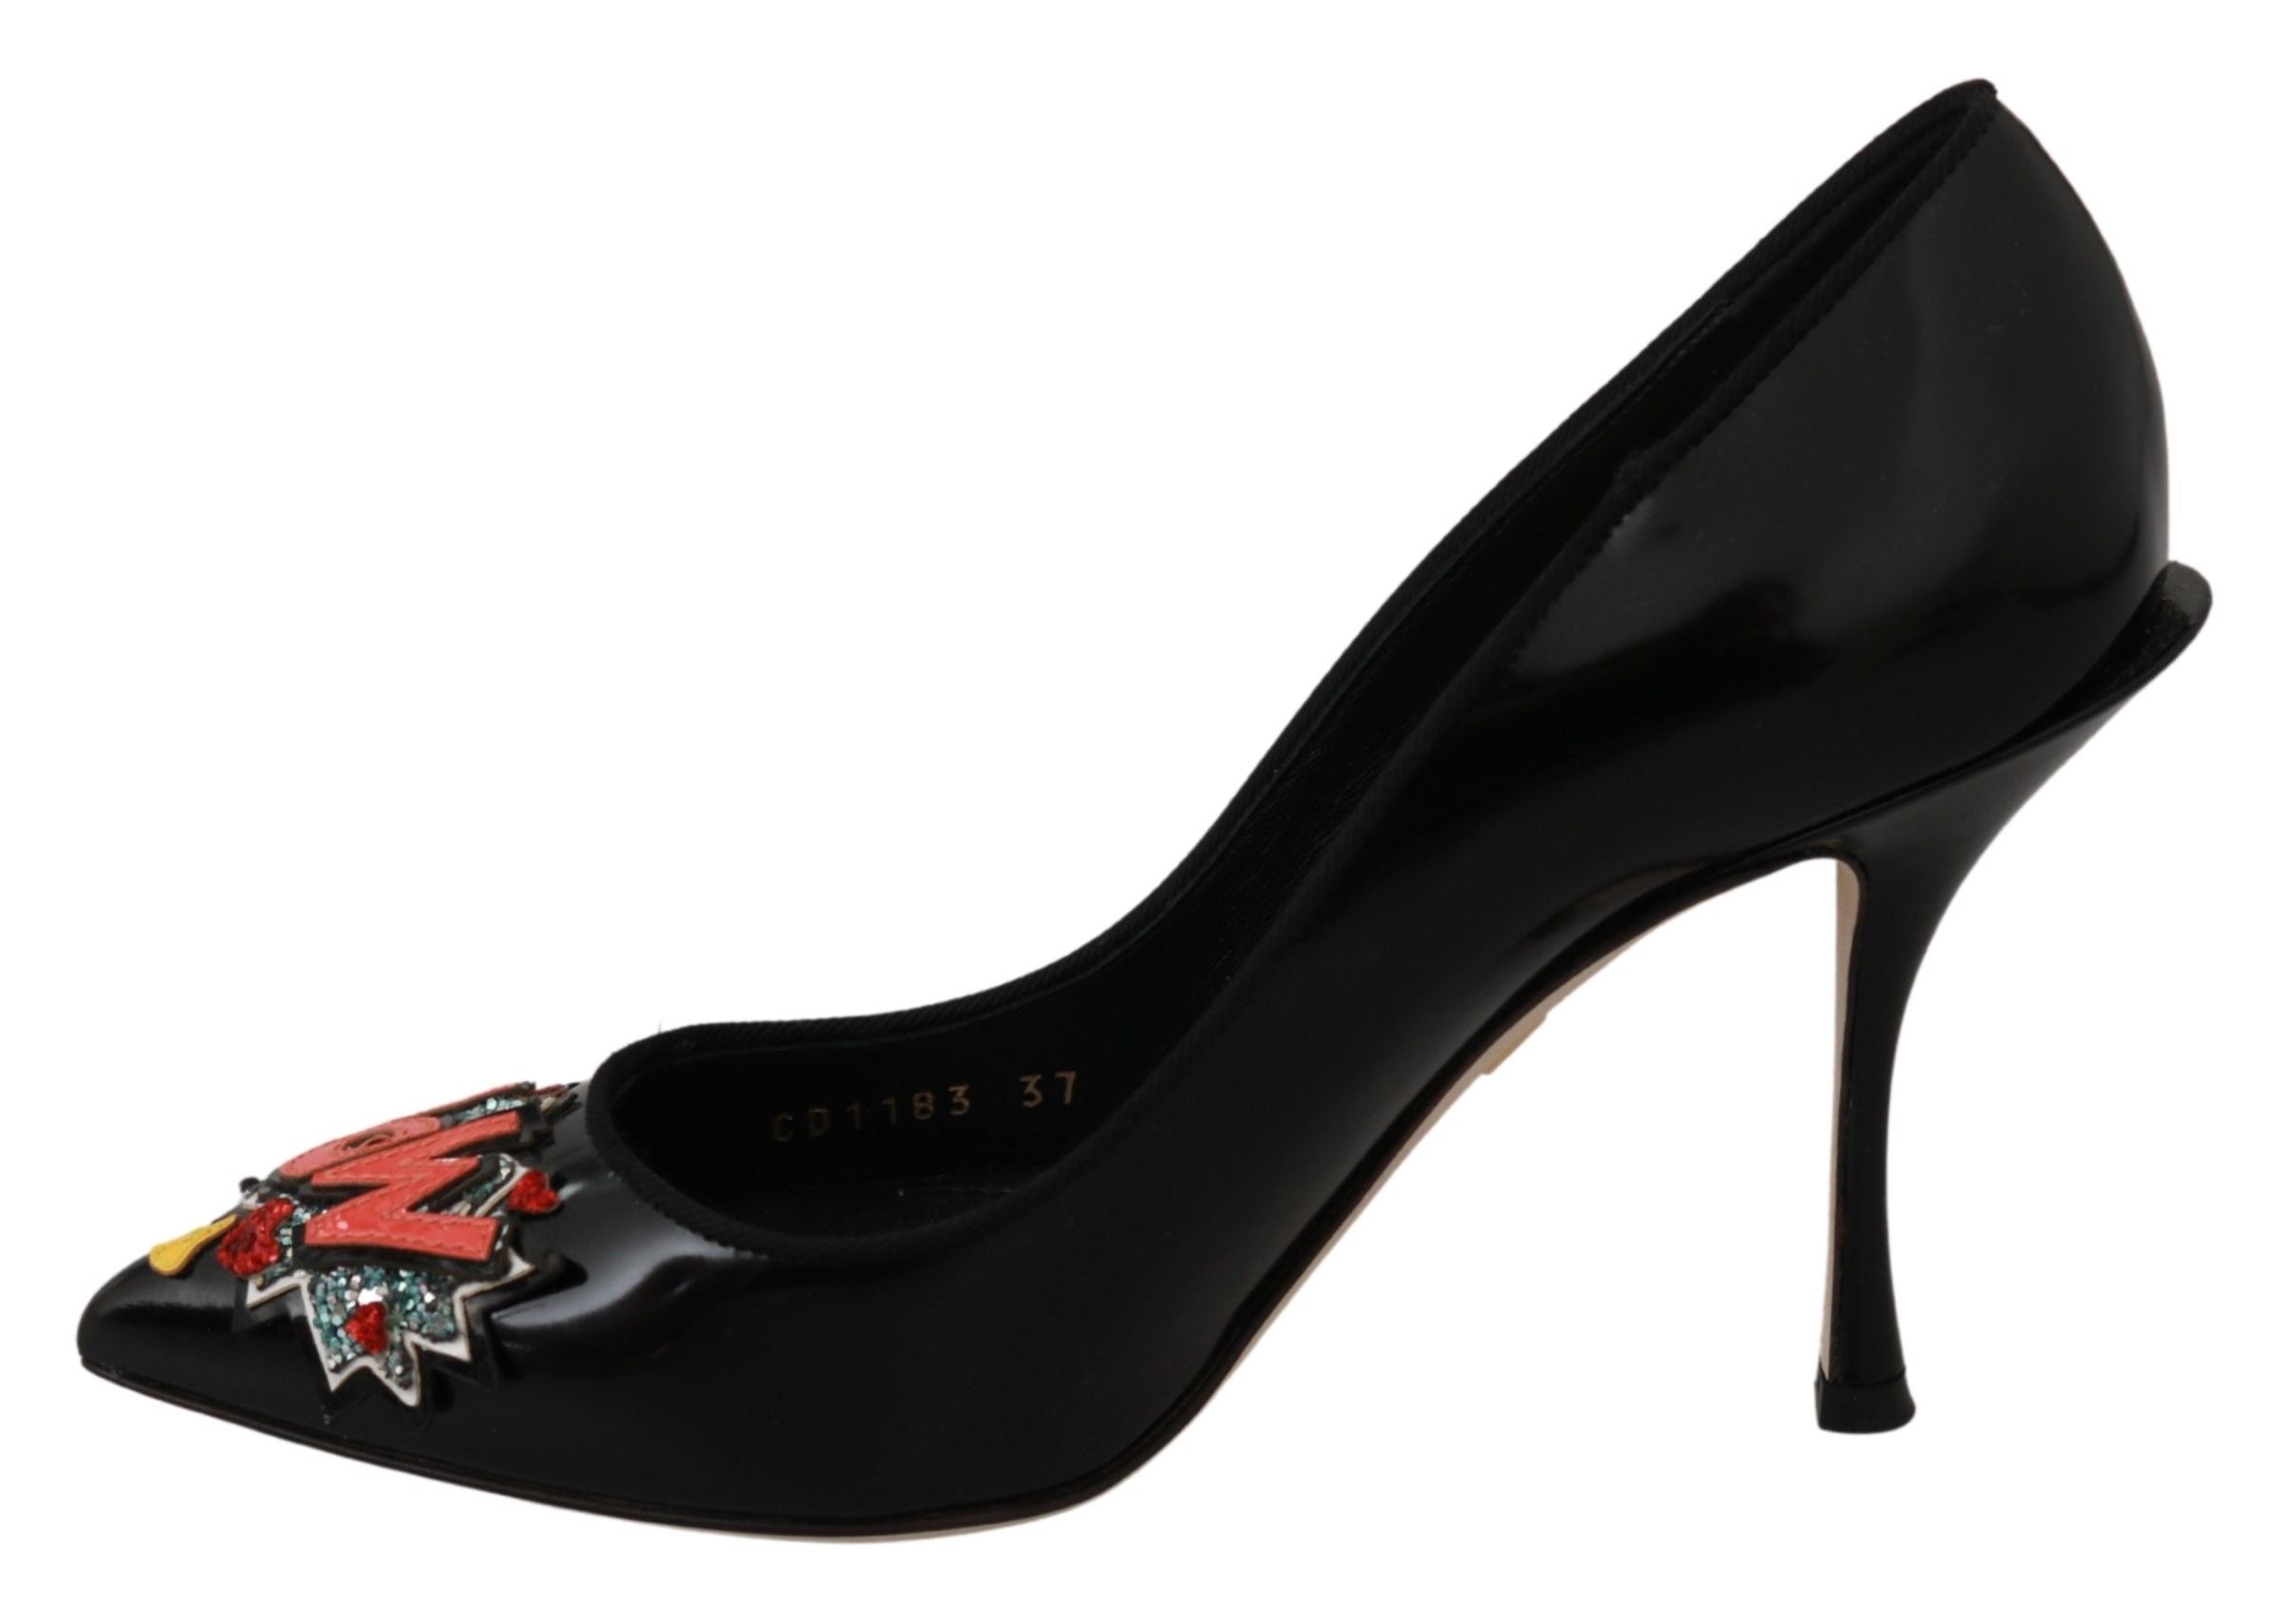 Dolce & Gabbana Black Leather WOW Heels Pumps Shoes